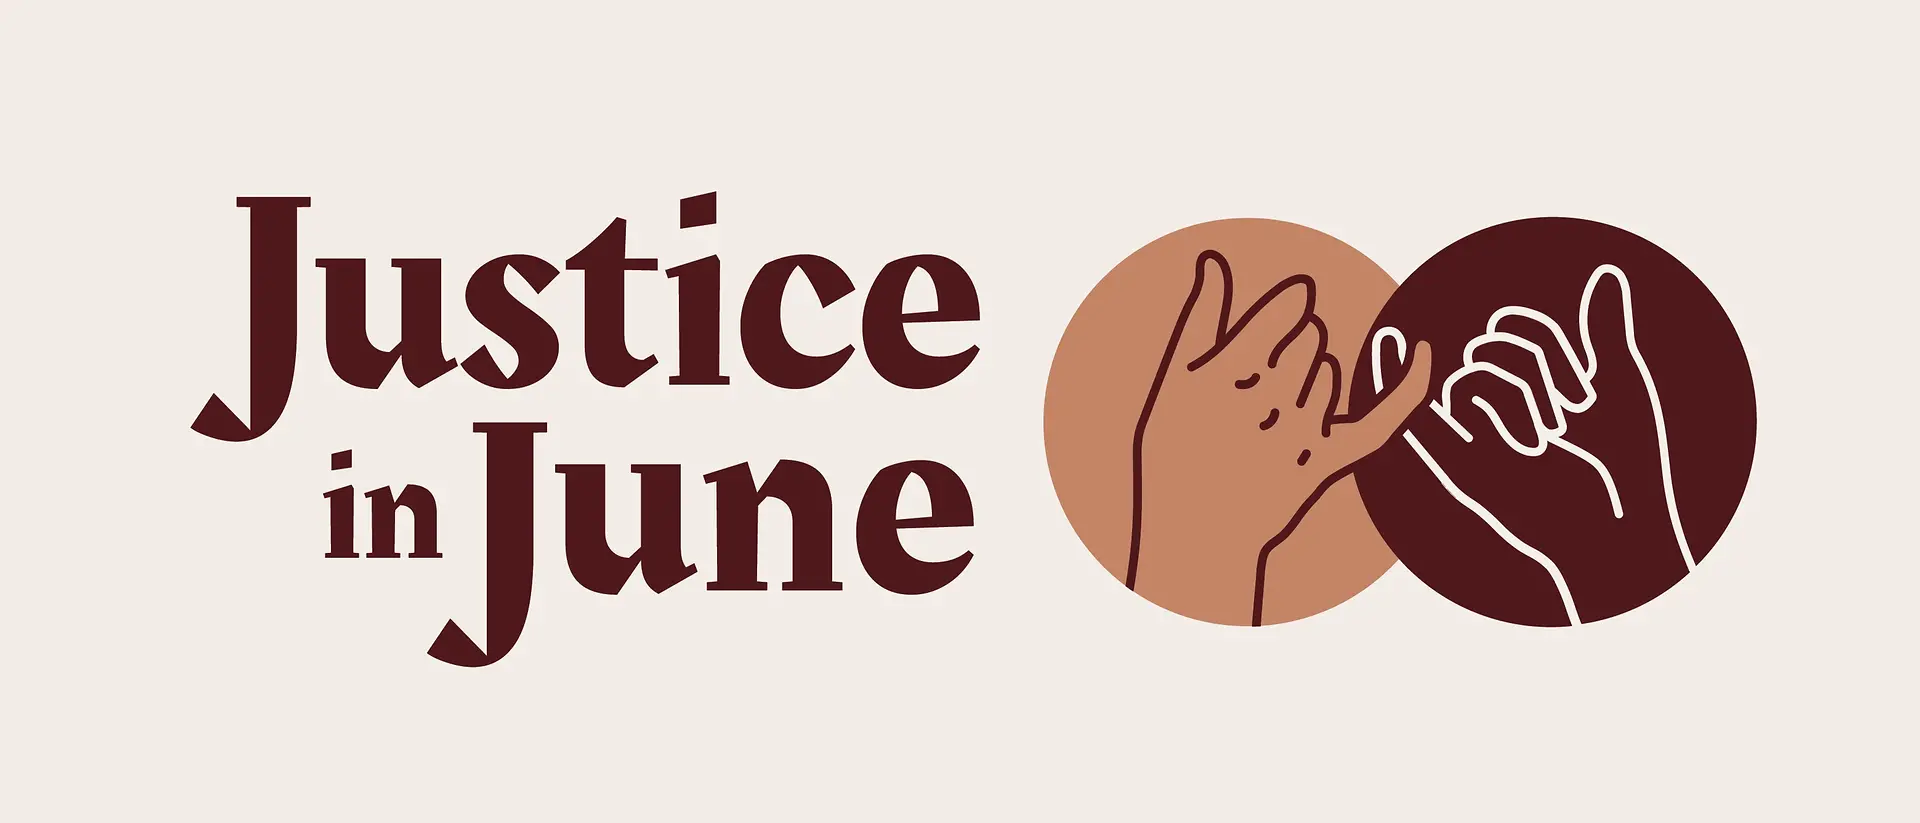 Justice in June logo